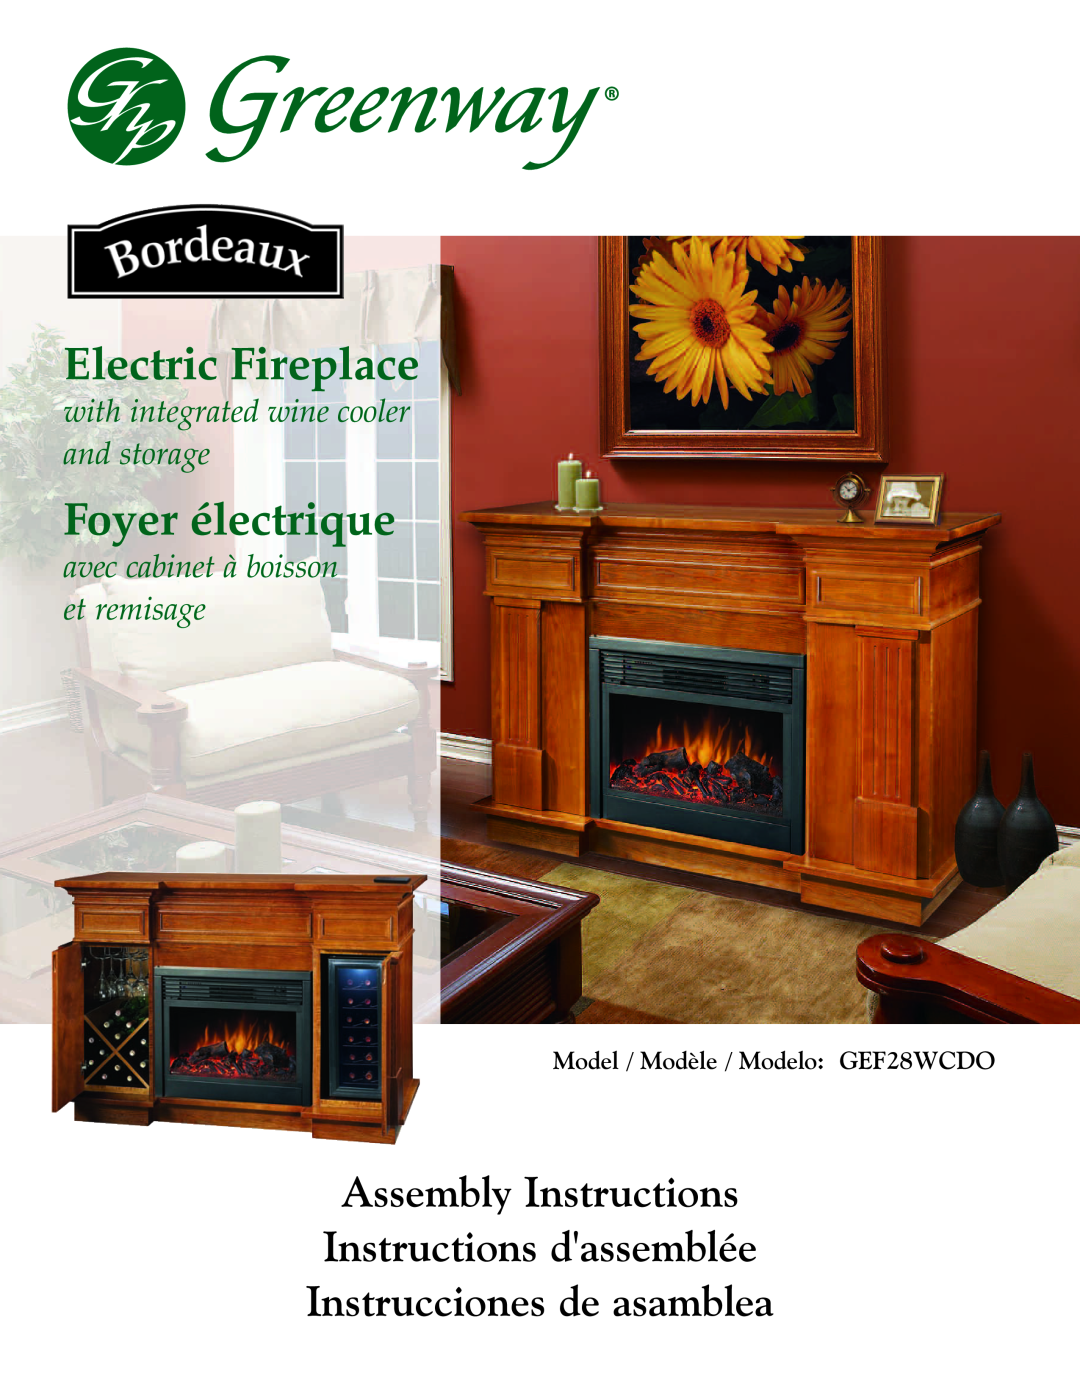 Greenway Home Products GEF28WCDO manual Electric Fireplace, Foyer électrique, Instrucciones de asamblea 